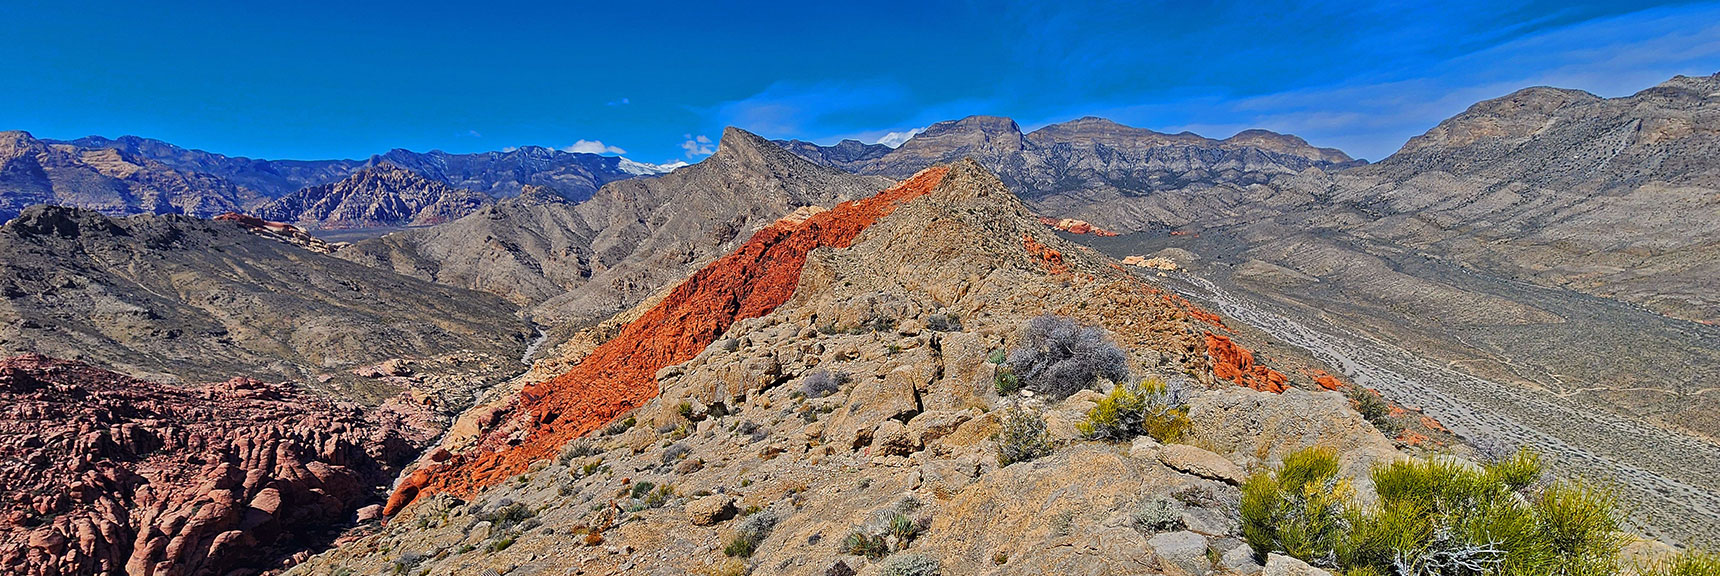 Upper Ridgeline View Toward Gray Cap Peak, Behind High Point Ahead. | Gray Cap Ridge / Brownstone Basin Loop | La Madre Mountains Wilderness, Nevada